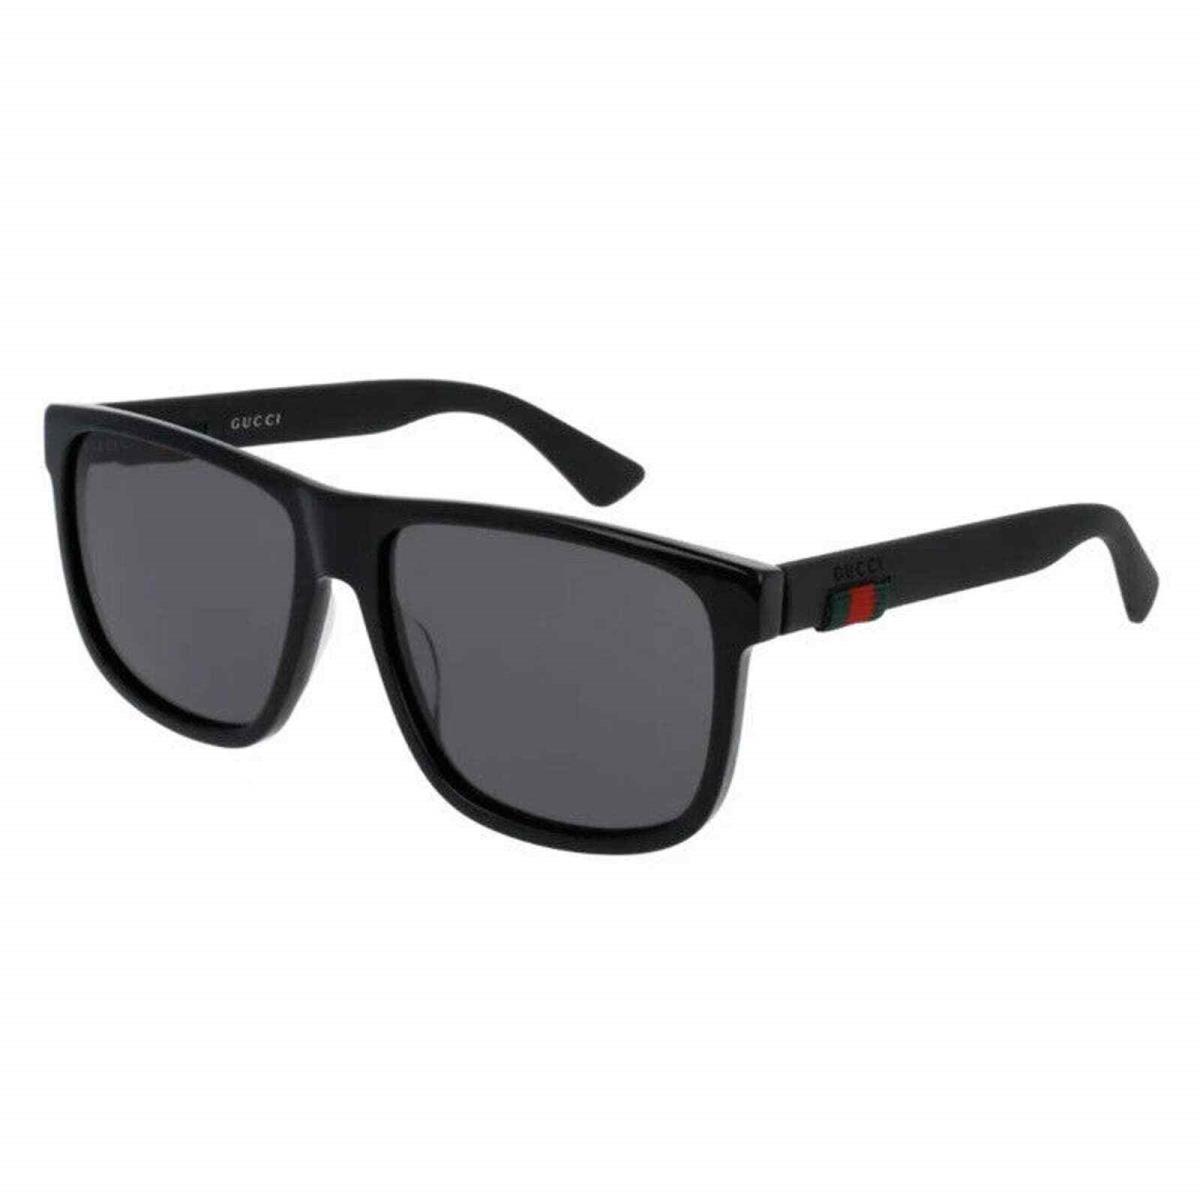 Gucci Urban GG0010S 0010 001 Black Grey Lens 58mm Large Men Sunglasses